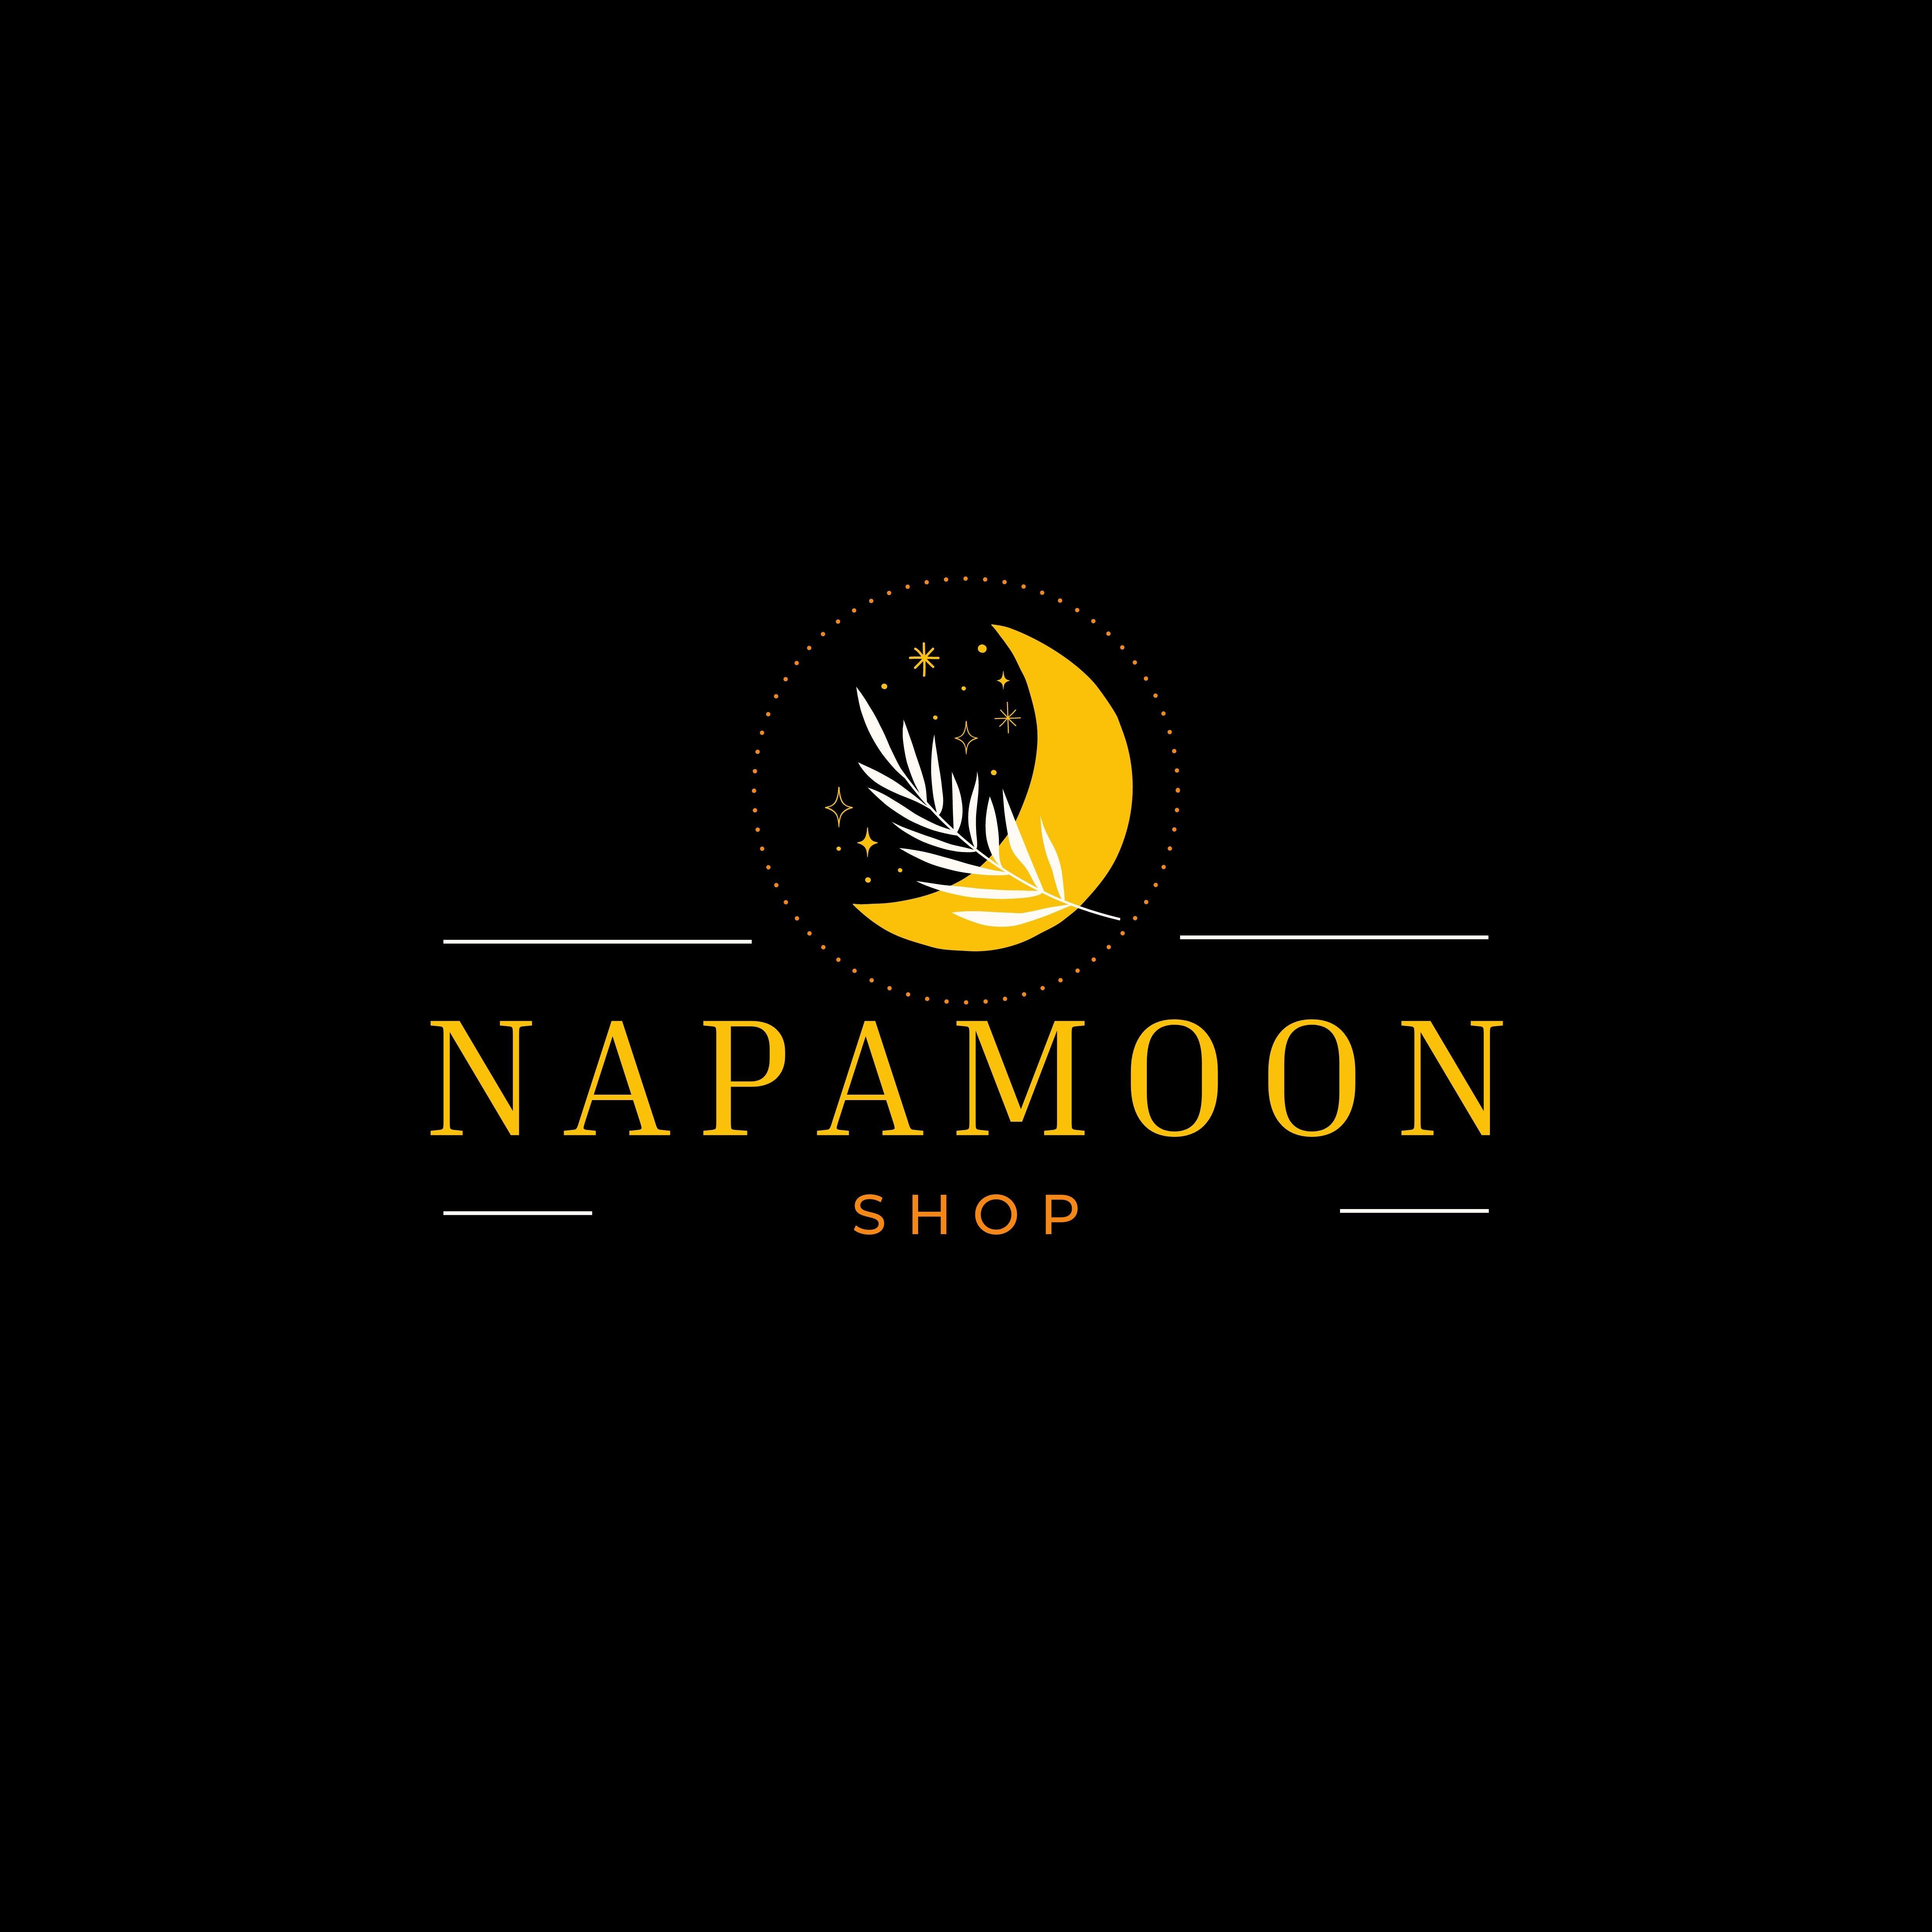 NAPAMOONDHOP